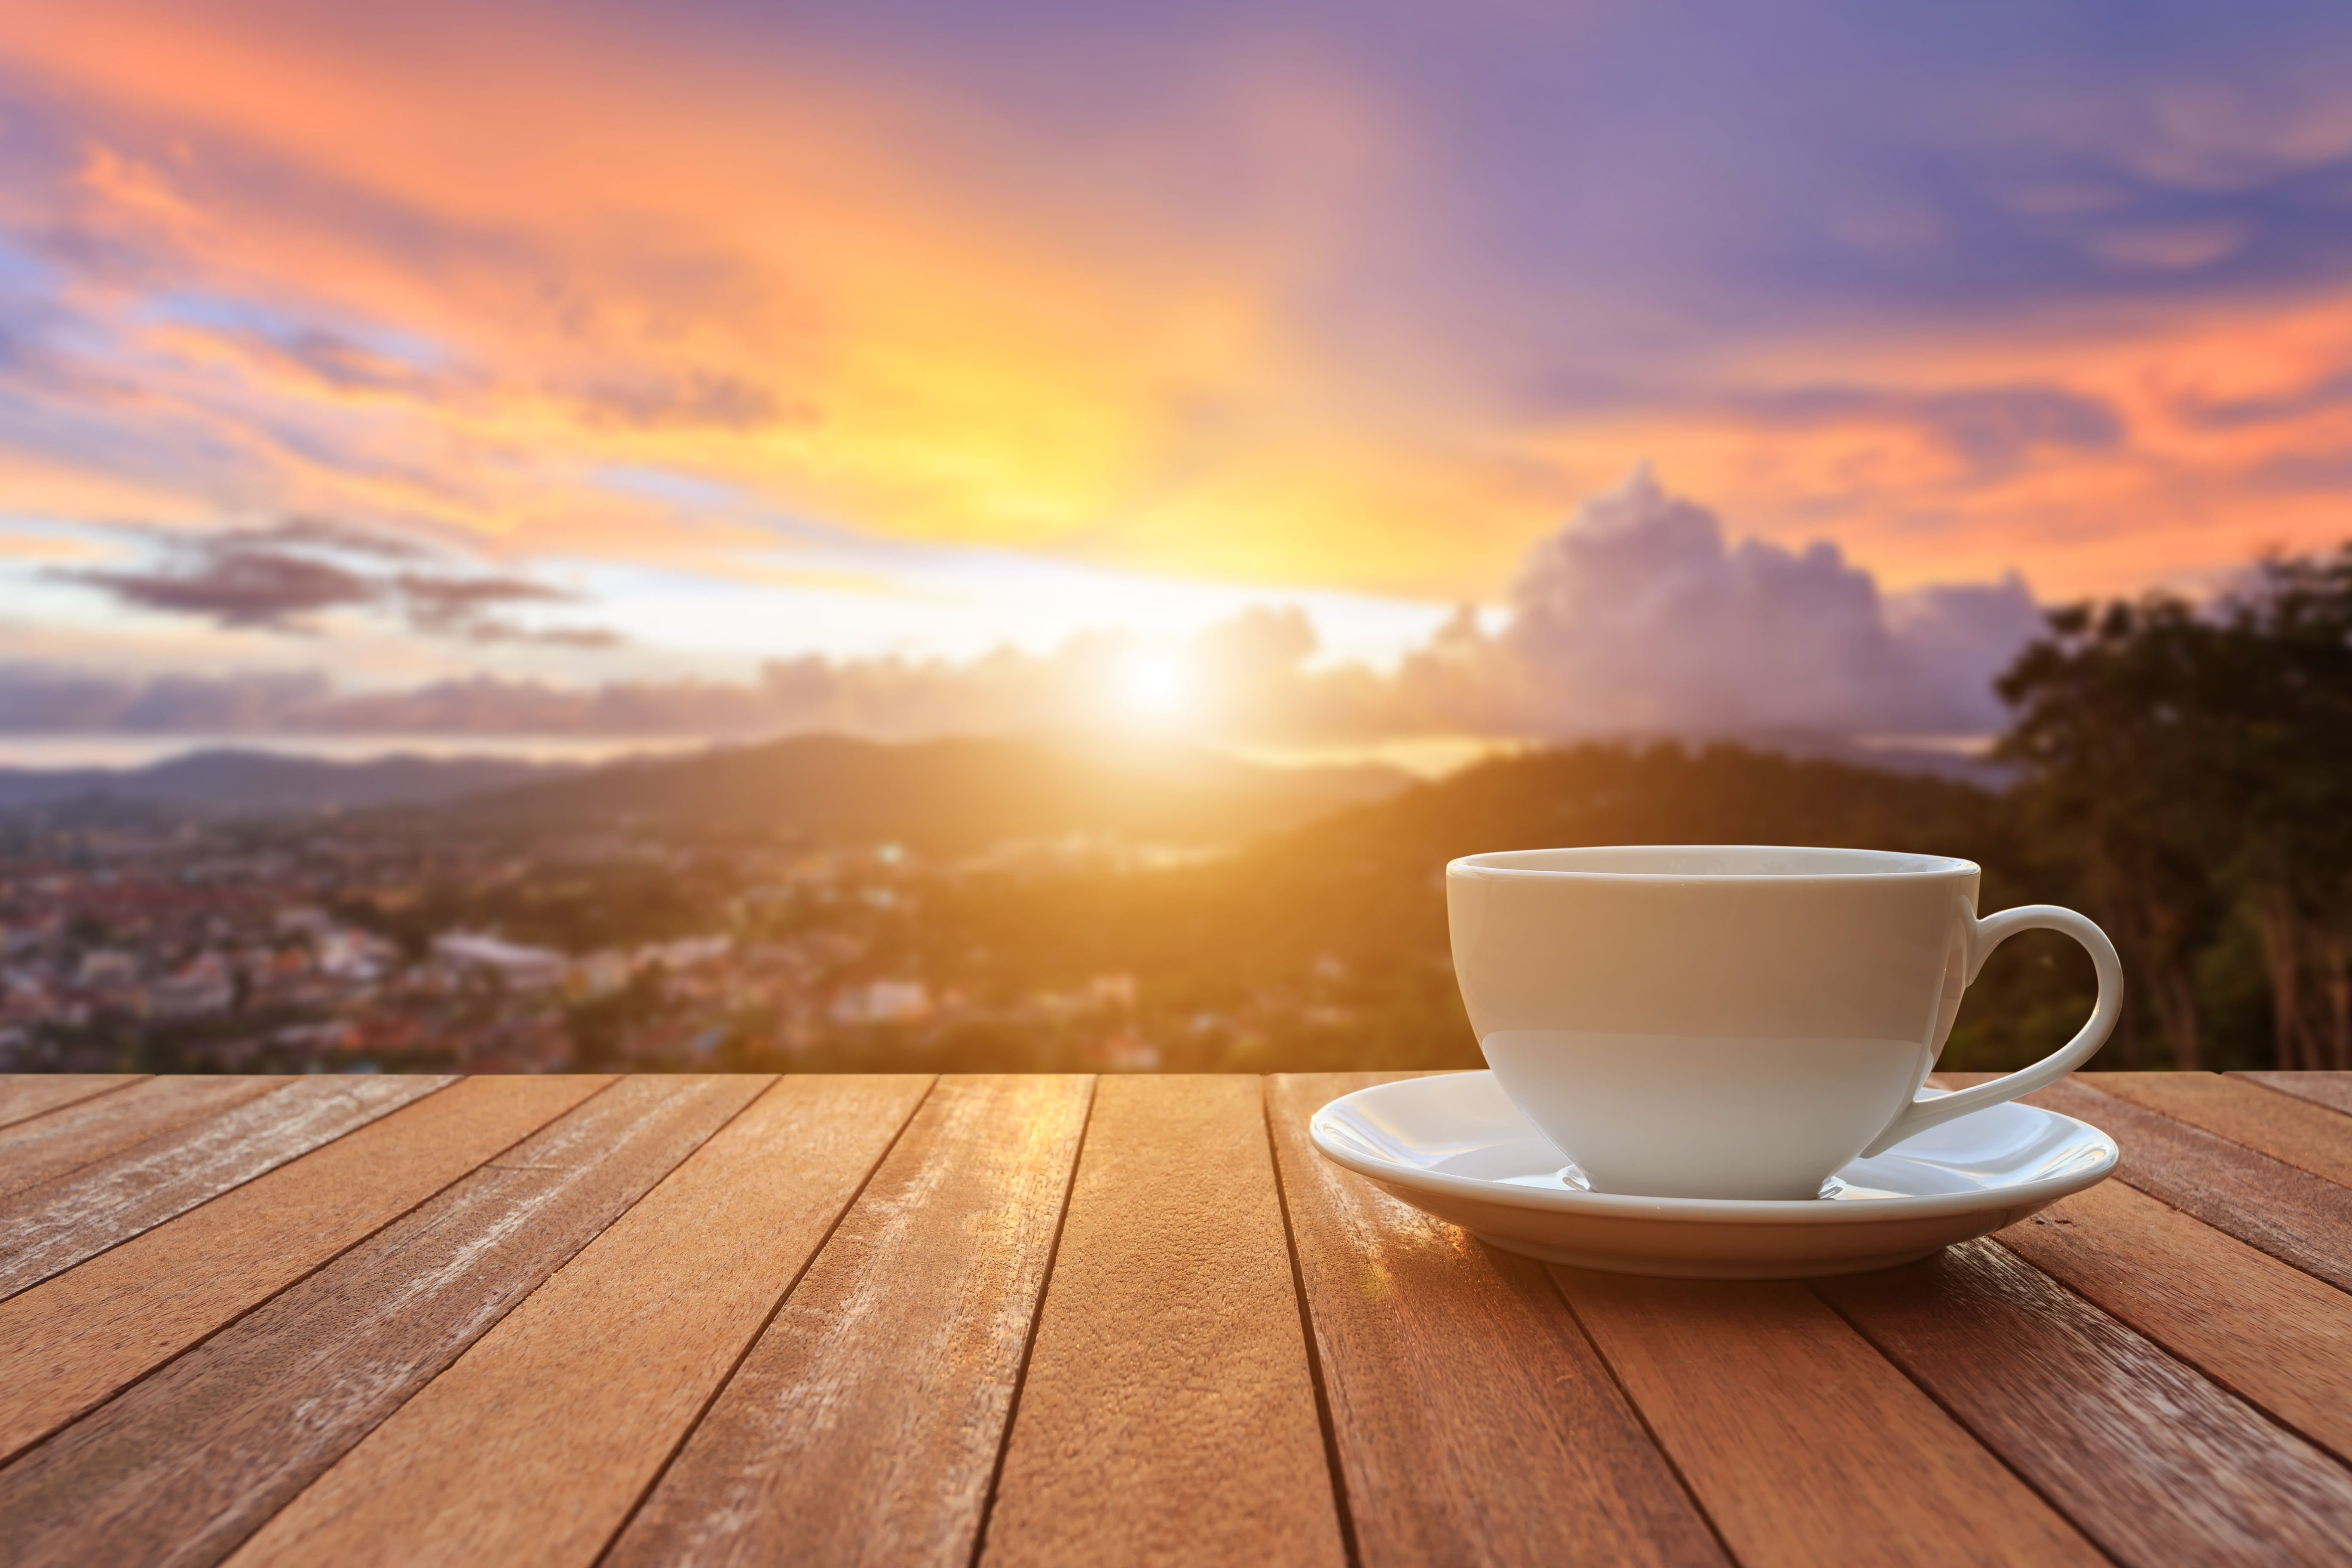 I have coffee in the morning. Утро солнце чашка кофе. Утро кофе солнце. Доброе утро рассвет. Утренний кофе на рассвете.